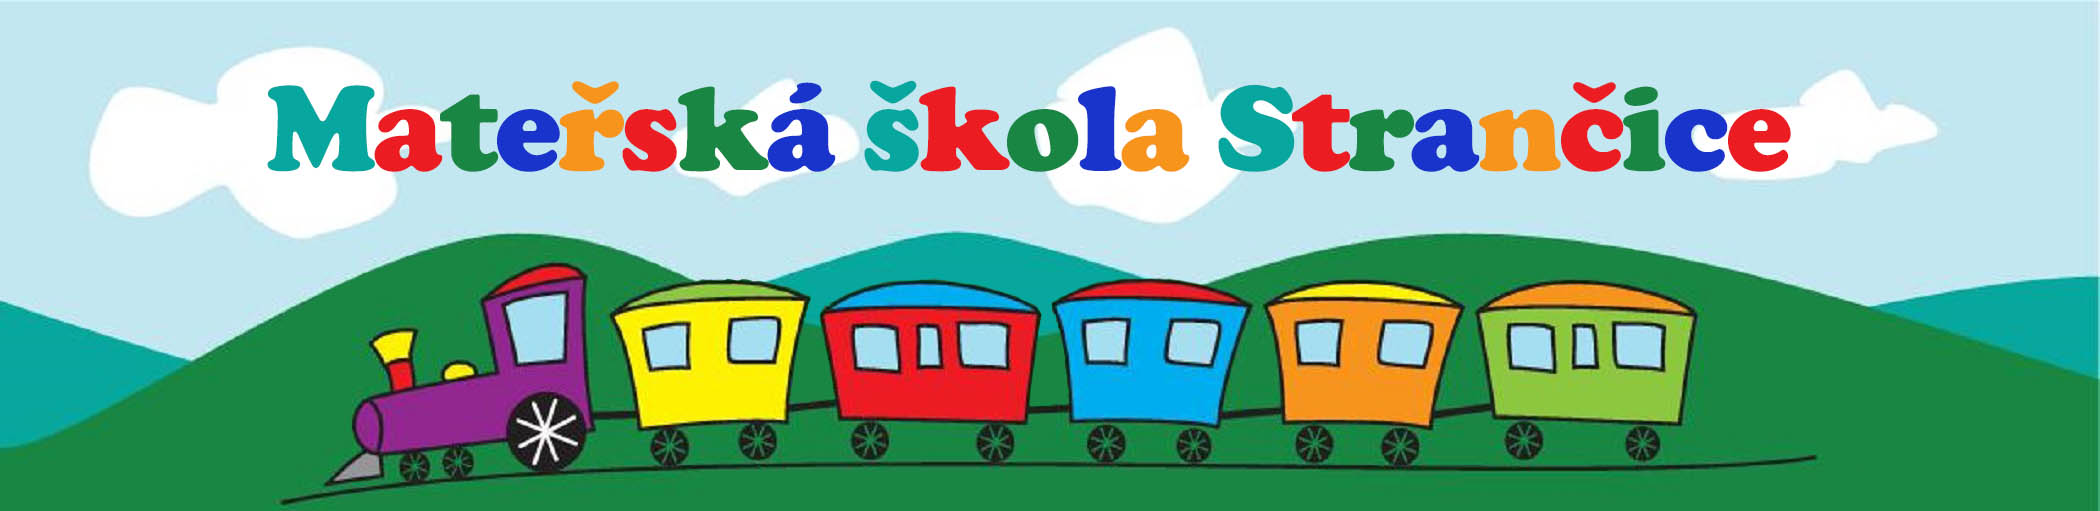 Mateřská škola Strančice logo